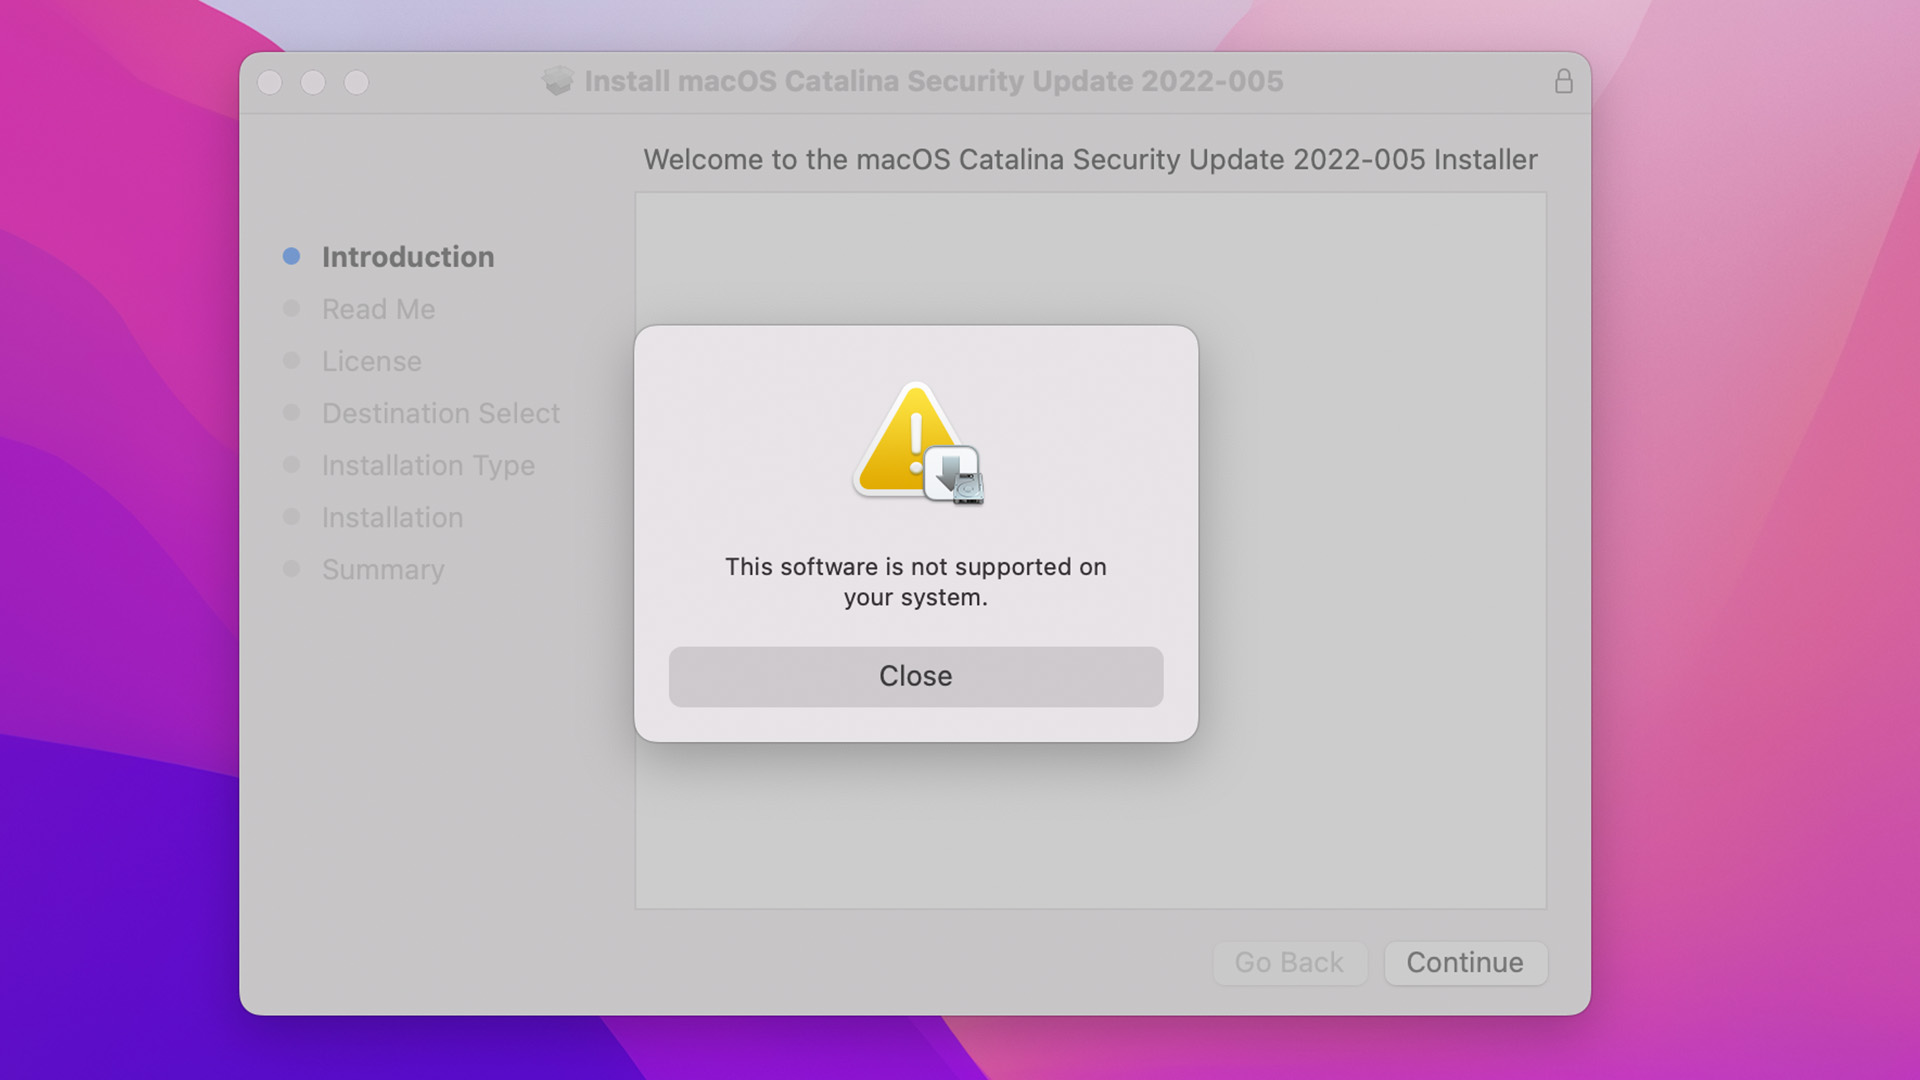 macOS software update